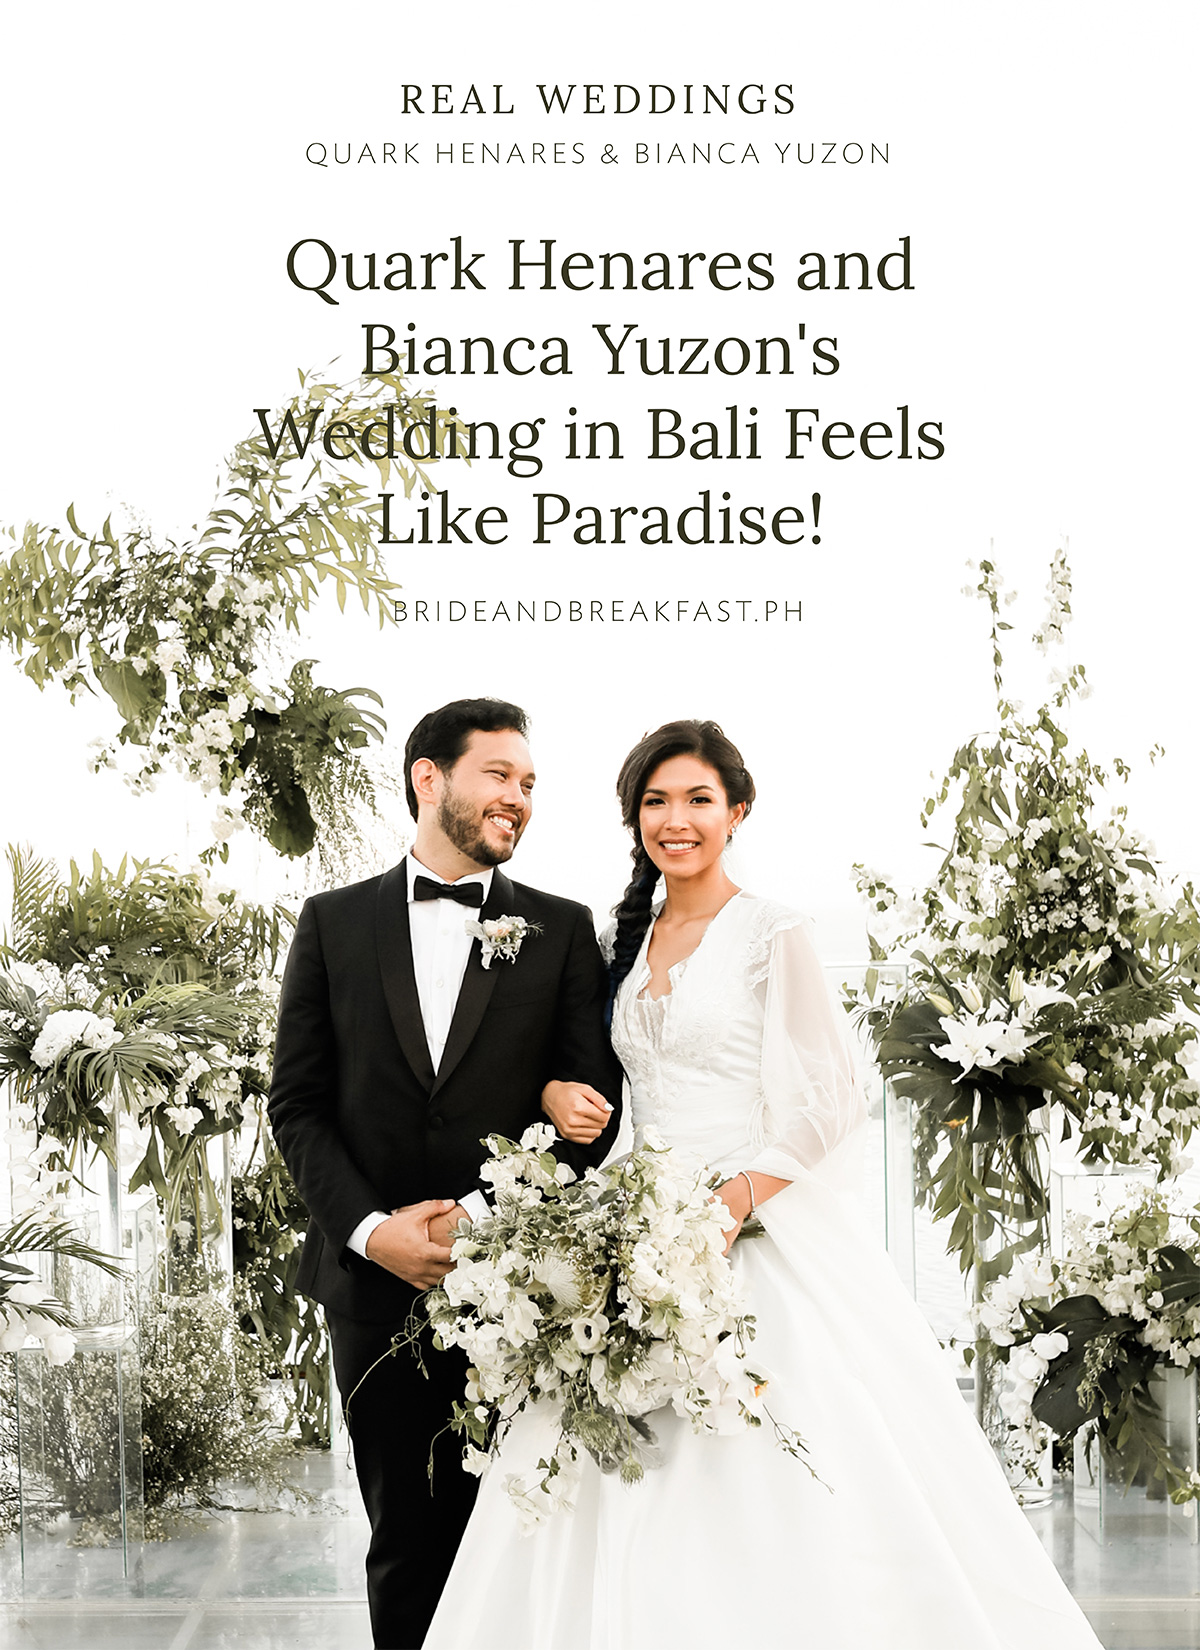 Quark Henares and Bianca Yuzon's Wedding in Bali Feels Like Paradise!